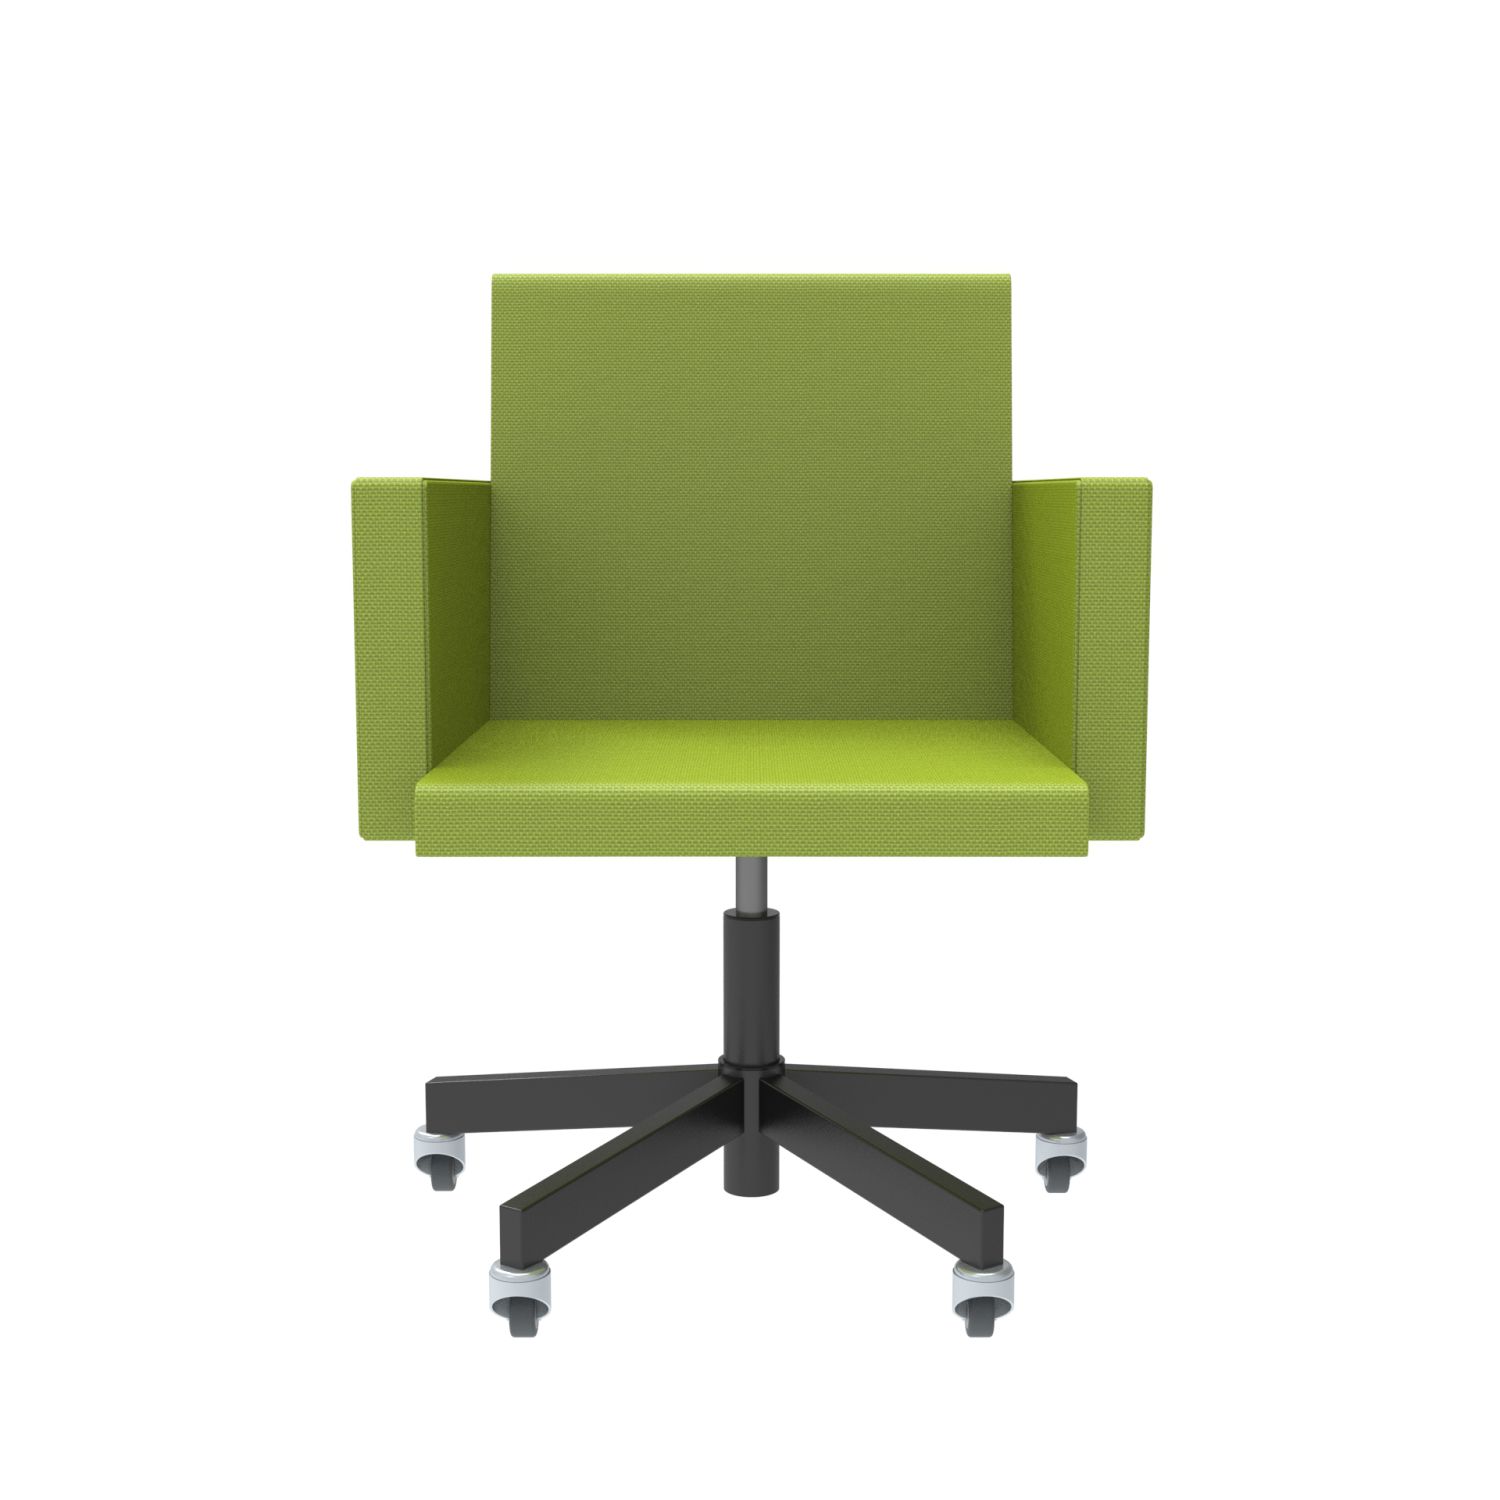 lensvelt atelier van lieshout office chair with armrests fairway green 020 black ral9005 soft rolls